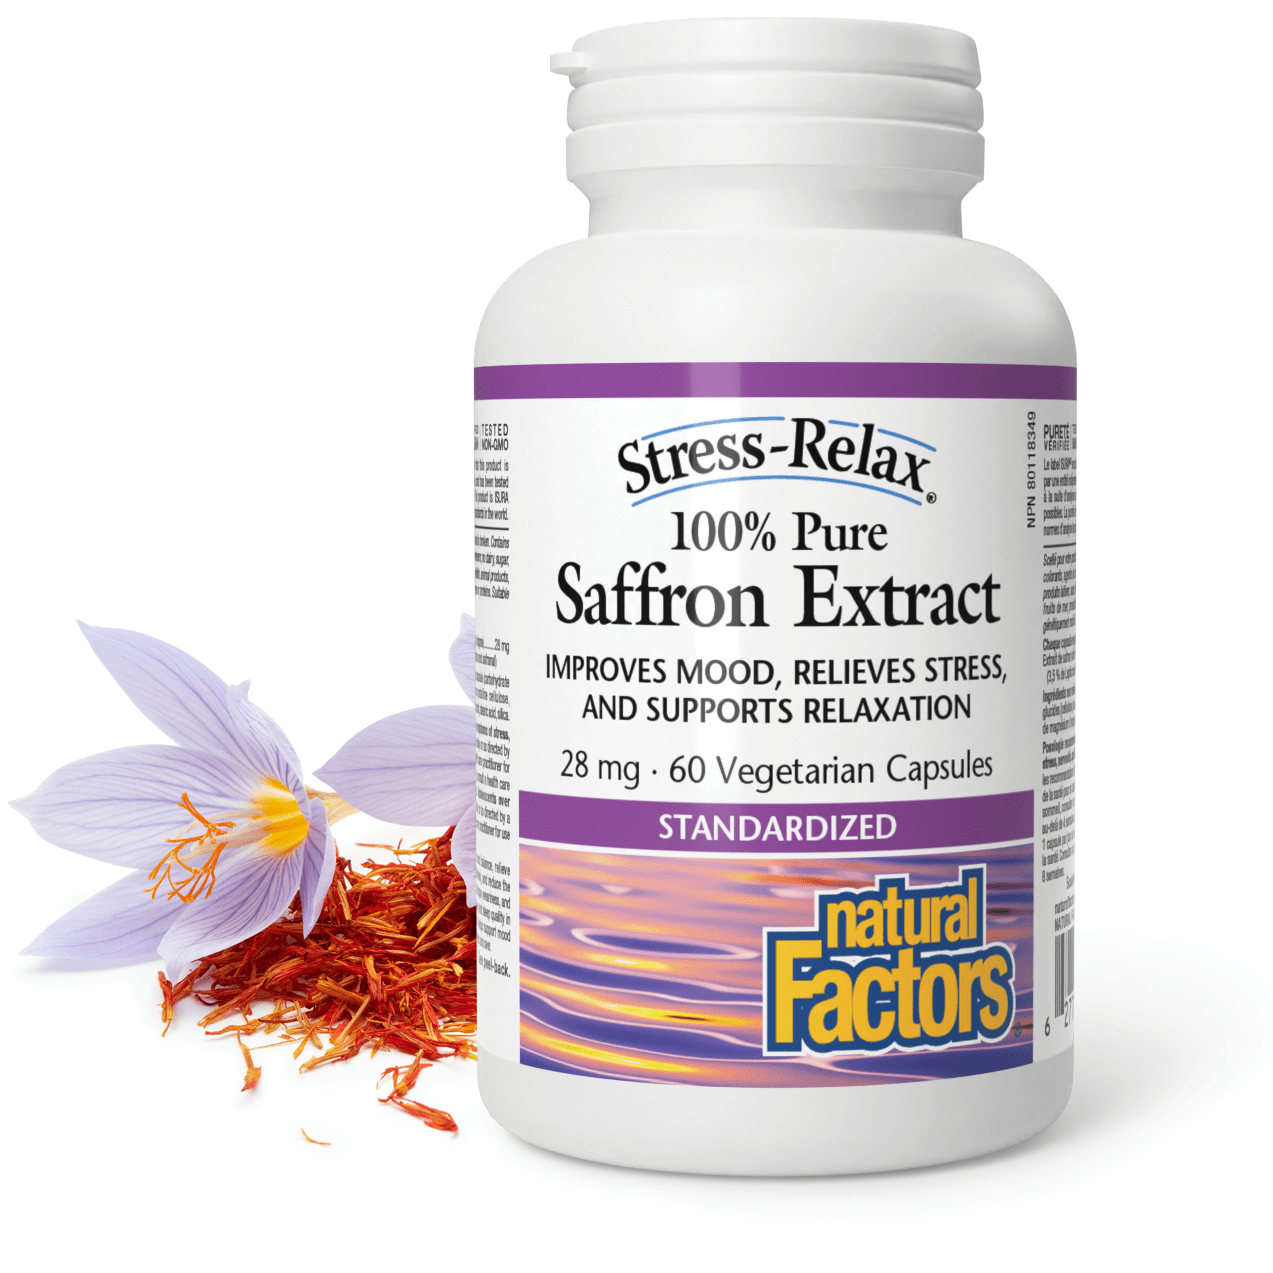 Saffron Extract 100% Pure 28 mg, Stress-Relax, Natural Factors|v|image|2873